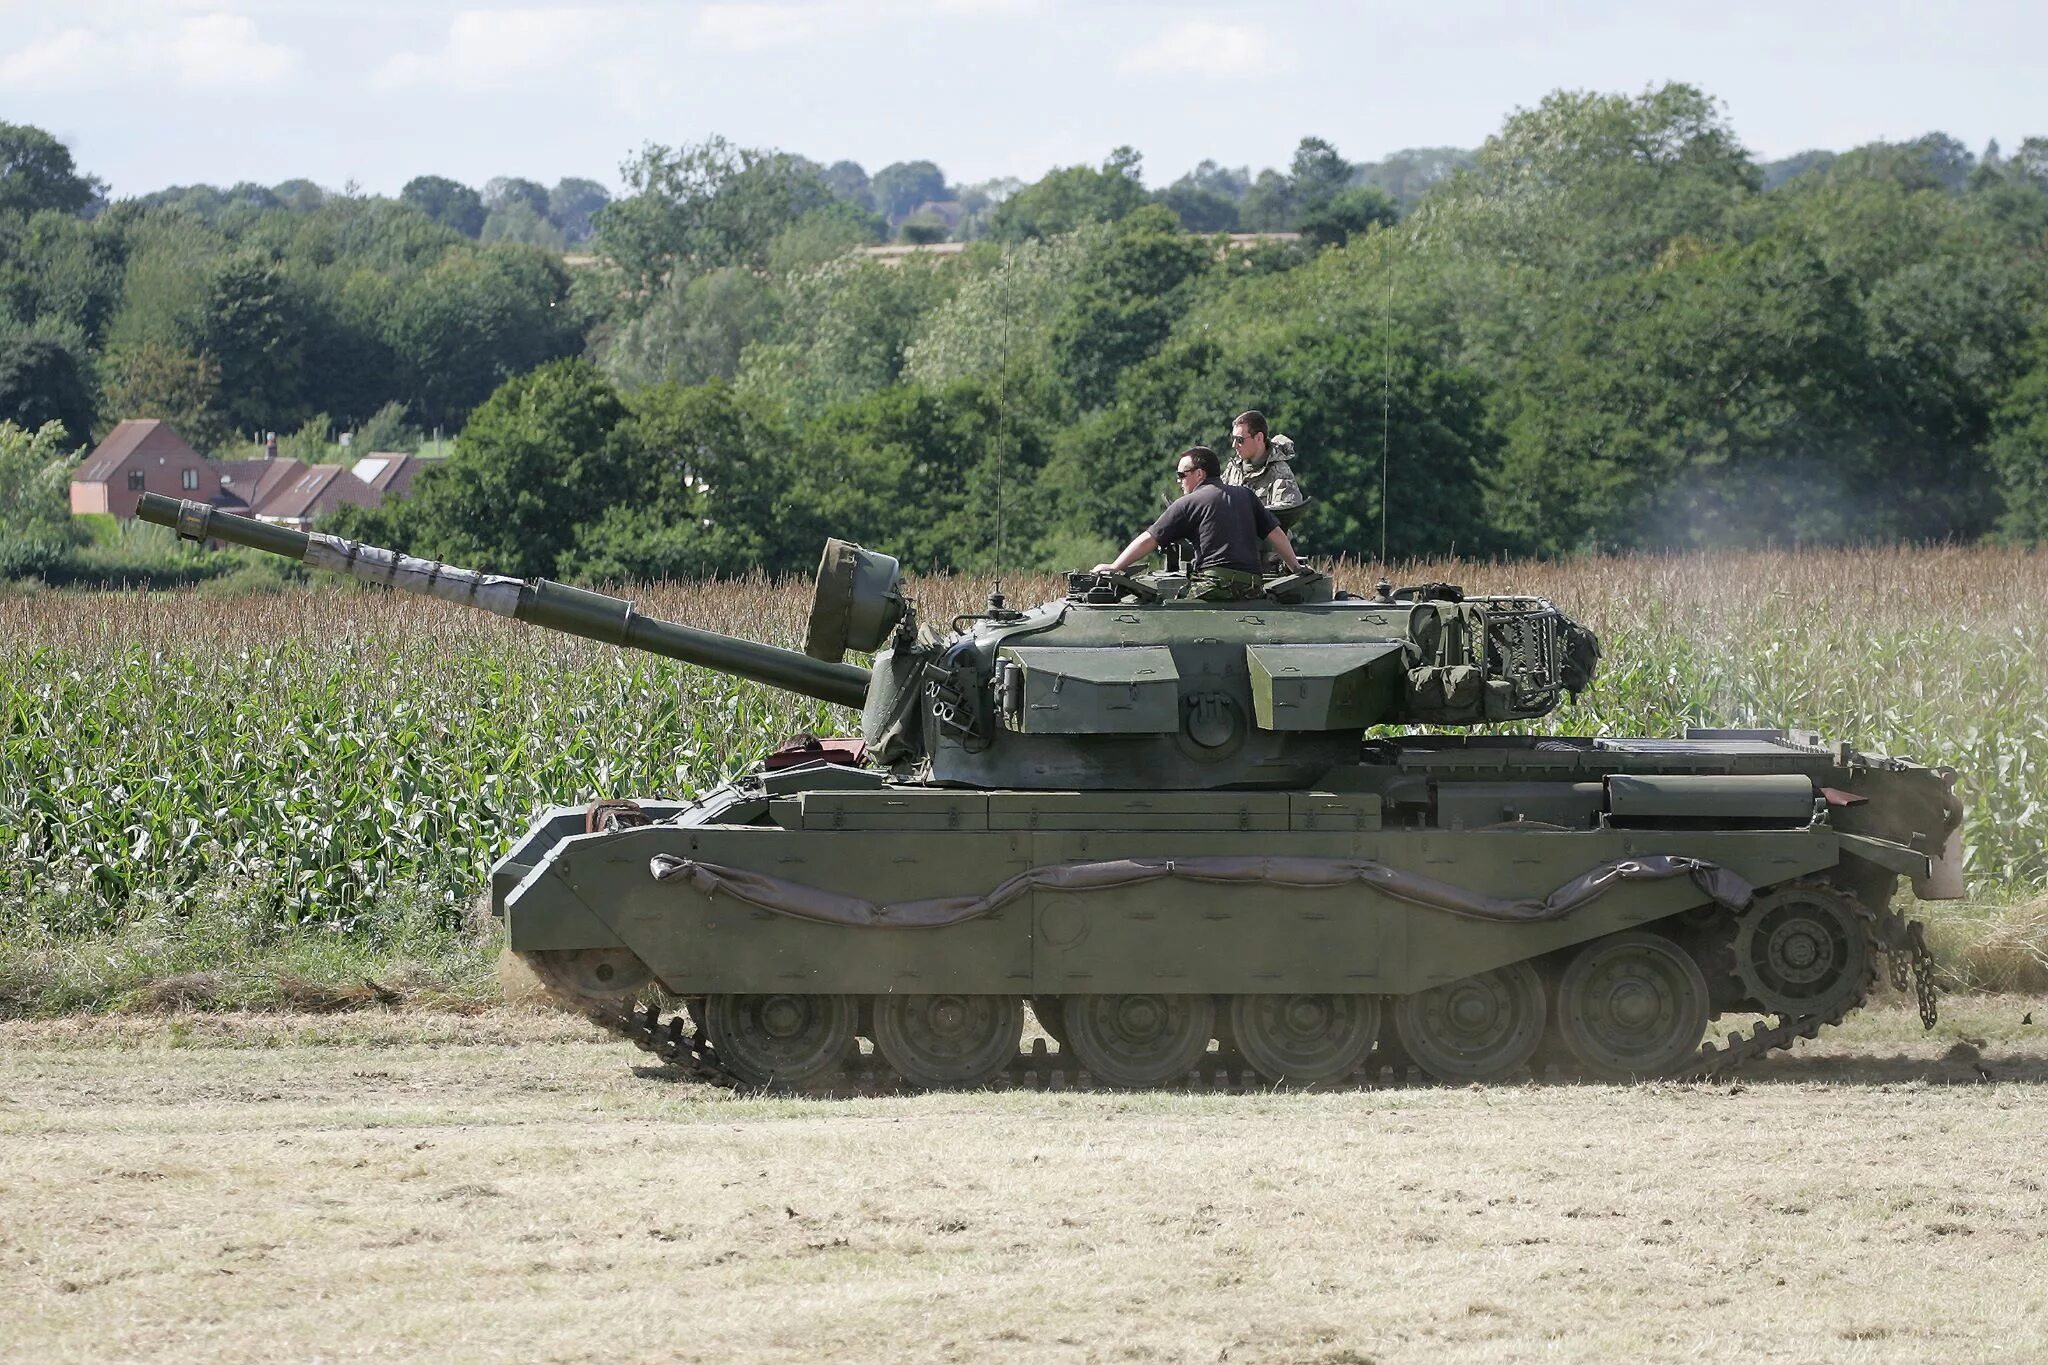 Fifine tank. Centurion MK. 13. Центурион танк. Британский танк Центурион. Танк Центурион МК 13.